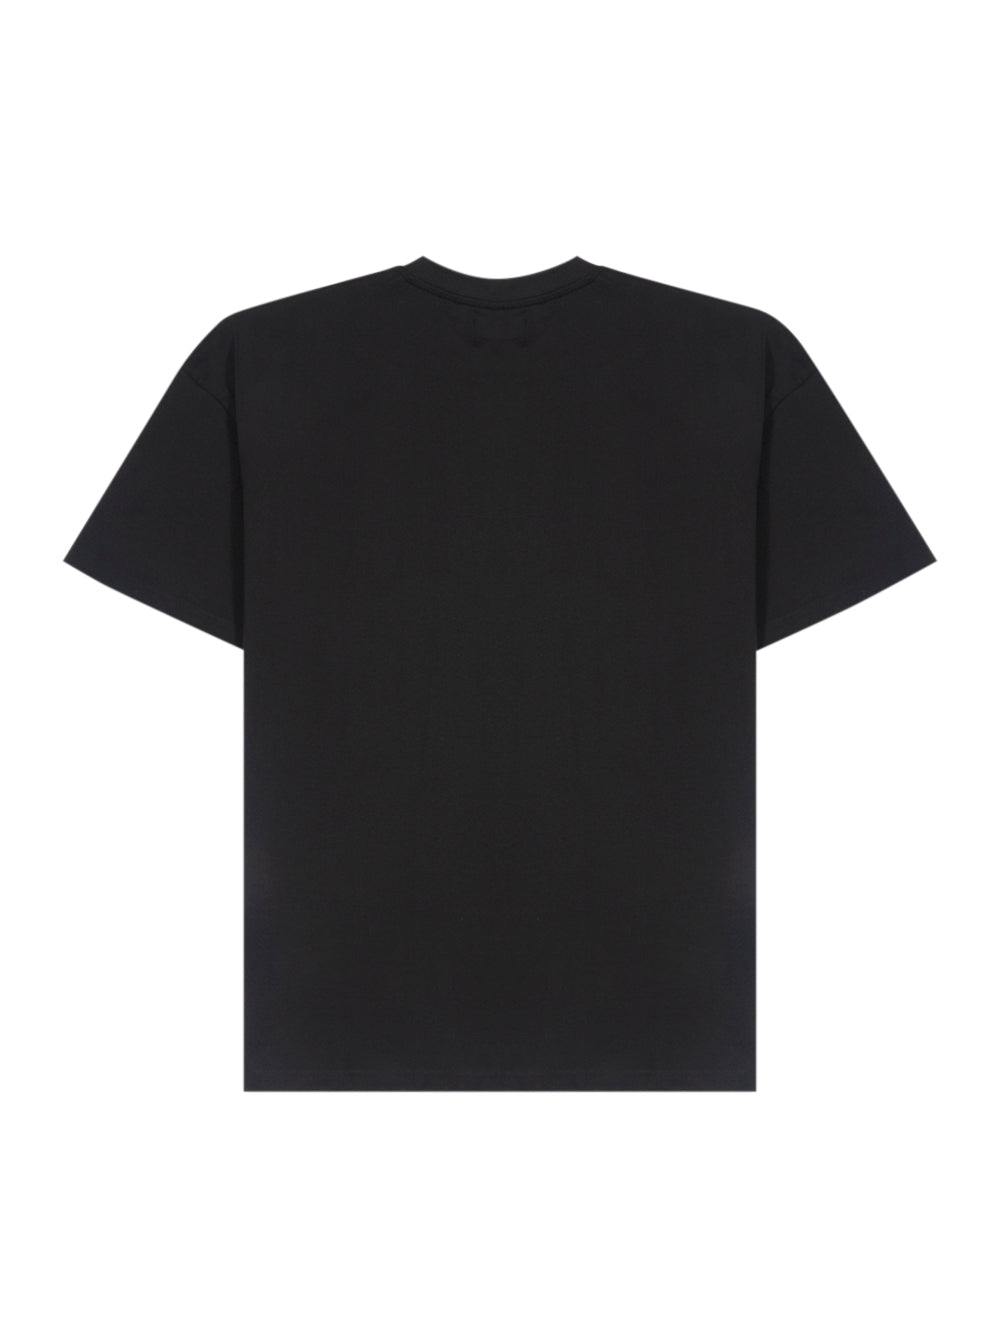 T-Shirt Astro Boy Rocket (Black)